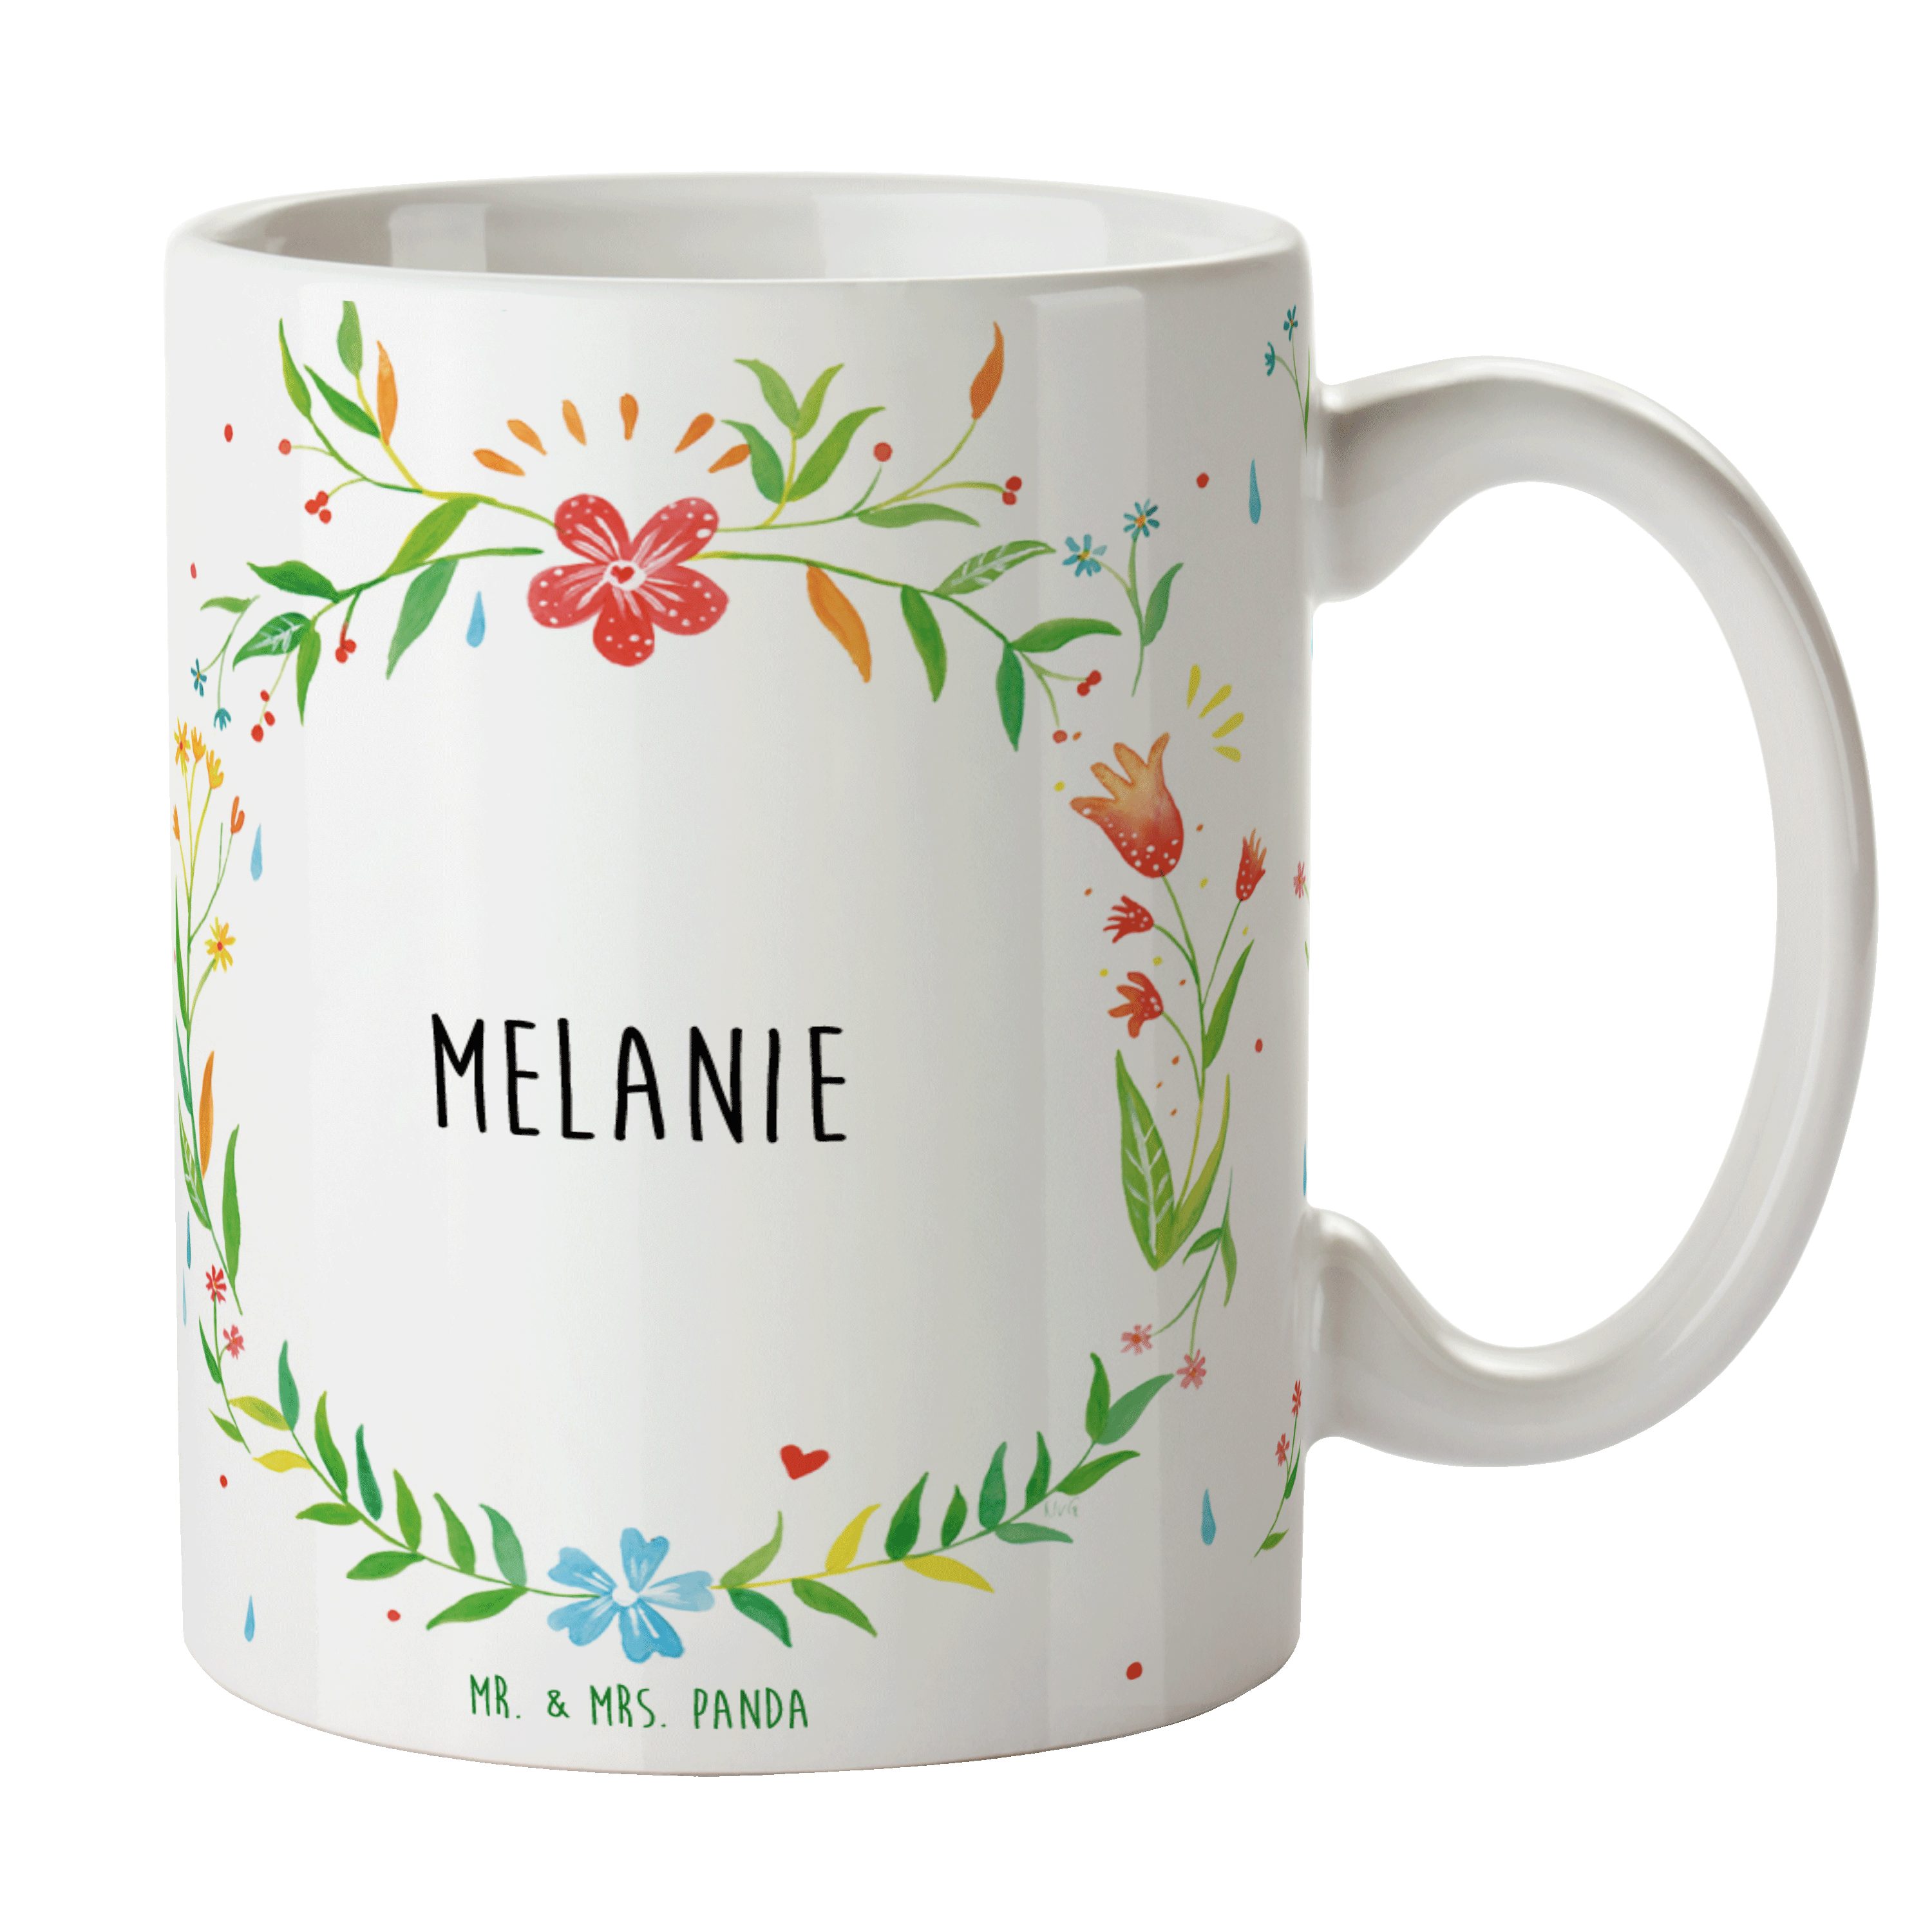 Mr. & Mrs. Panda Tasse Melanie - Geschenk, Tasse Sprüche, Keramiktasse, Büro Tasse, Kaffeeta, Keramik